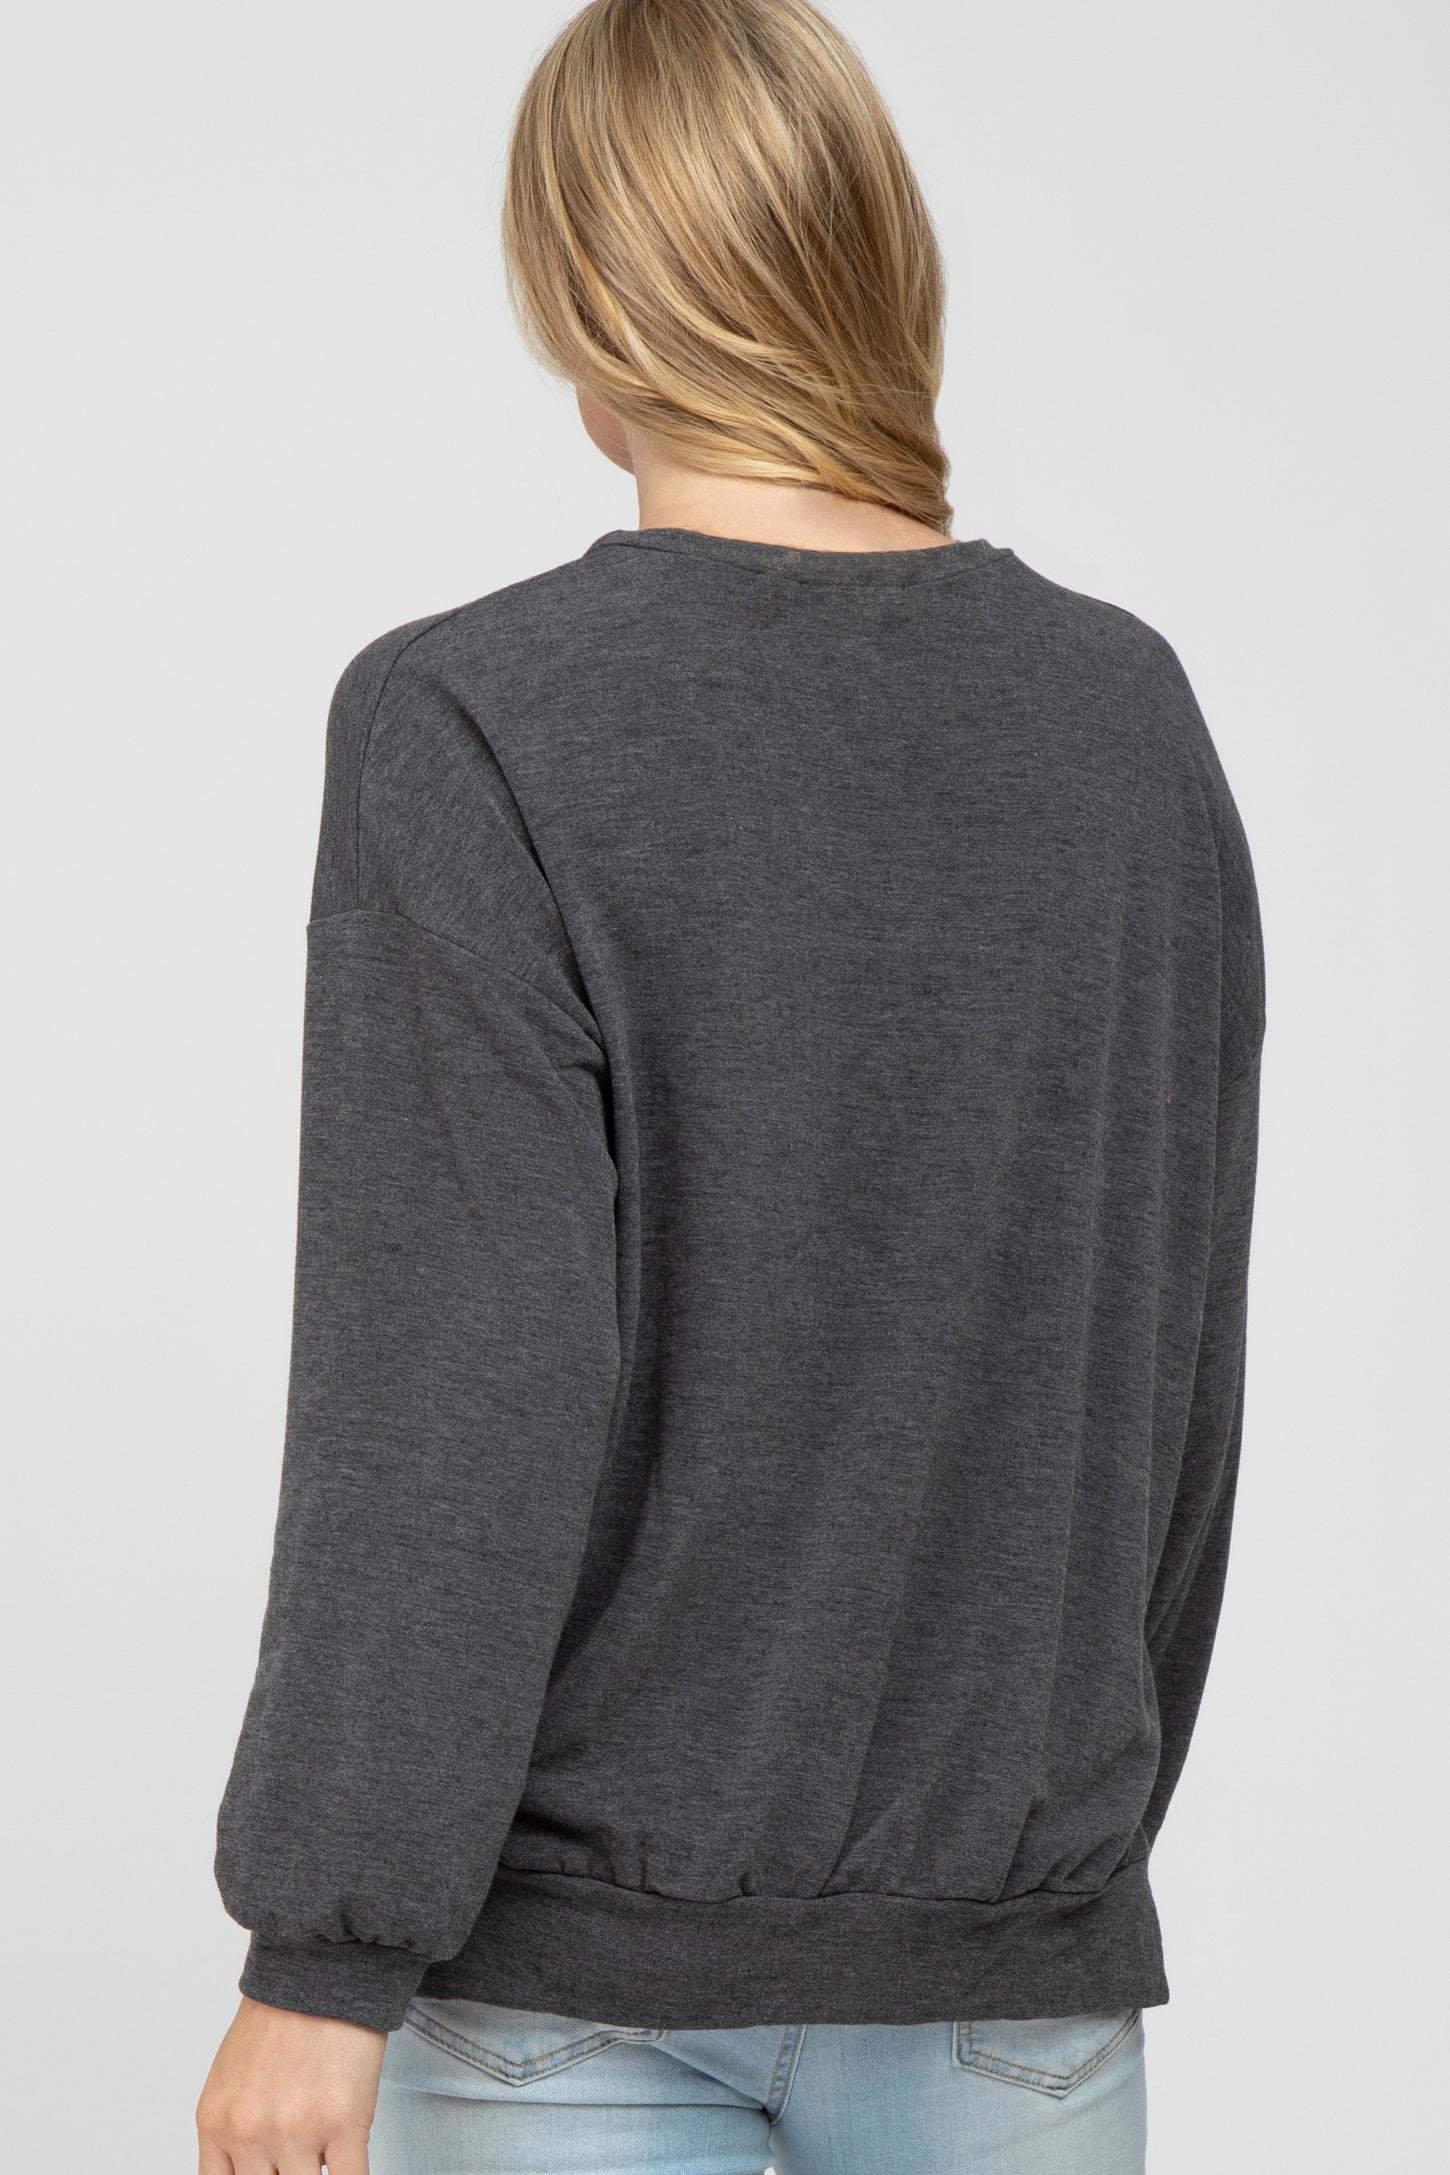 Charcoal Basic Side Slit Maternity Sweatshirt